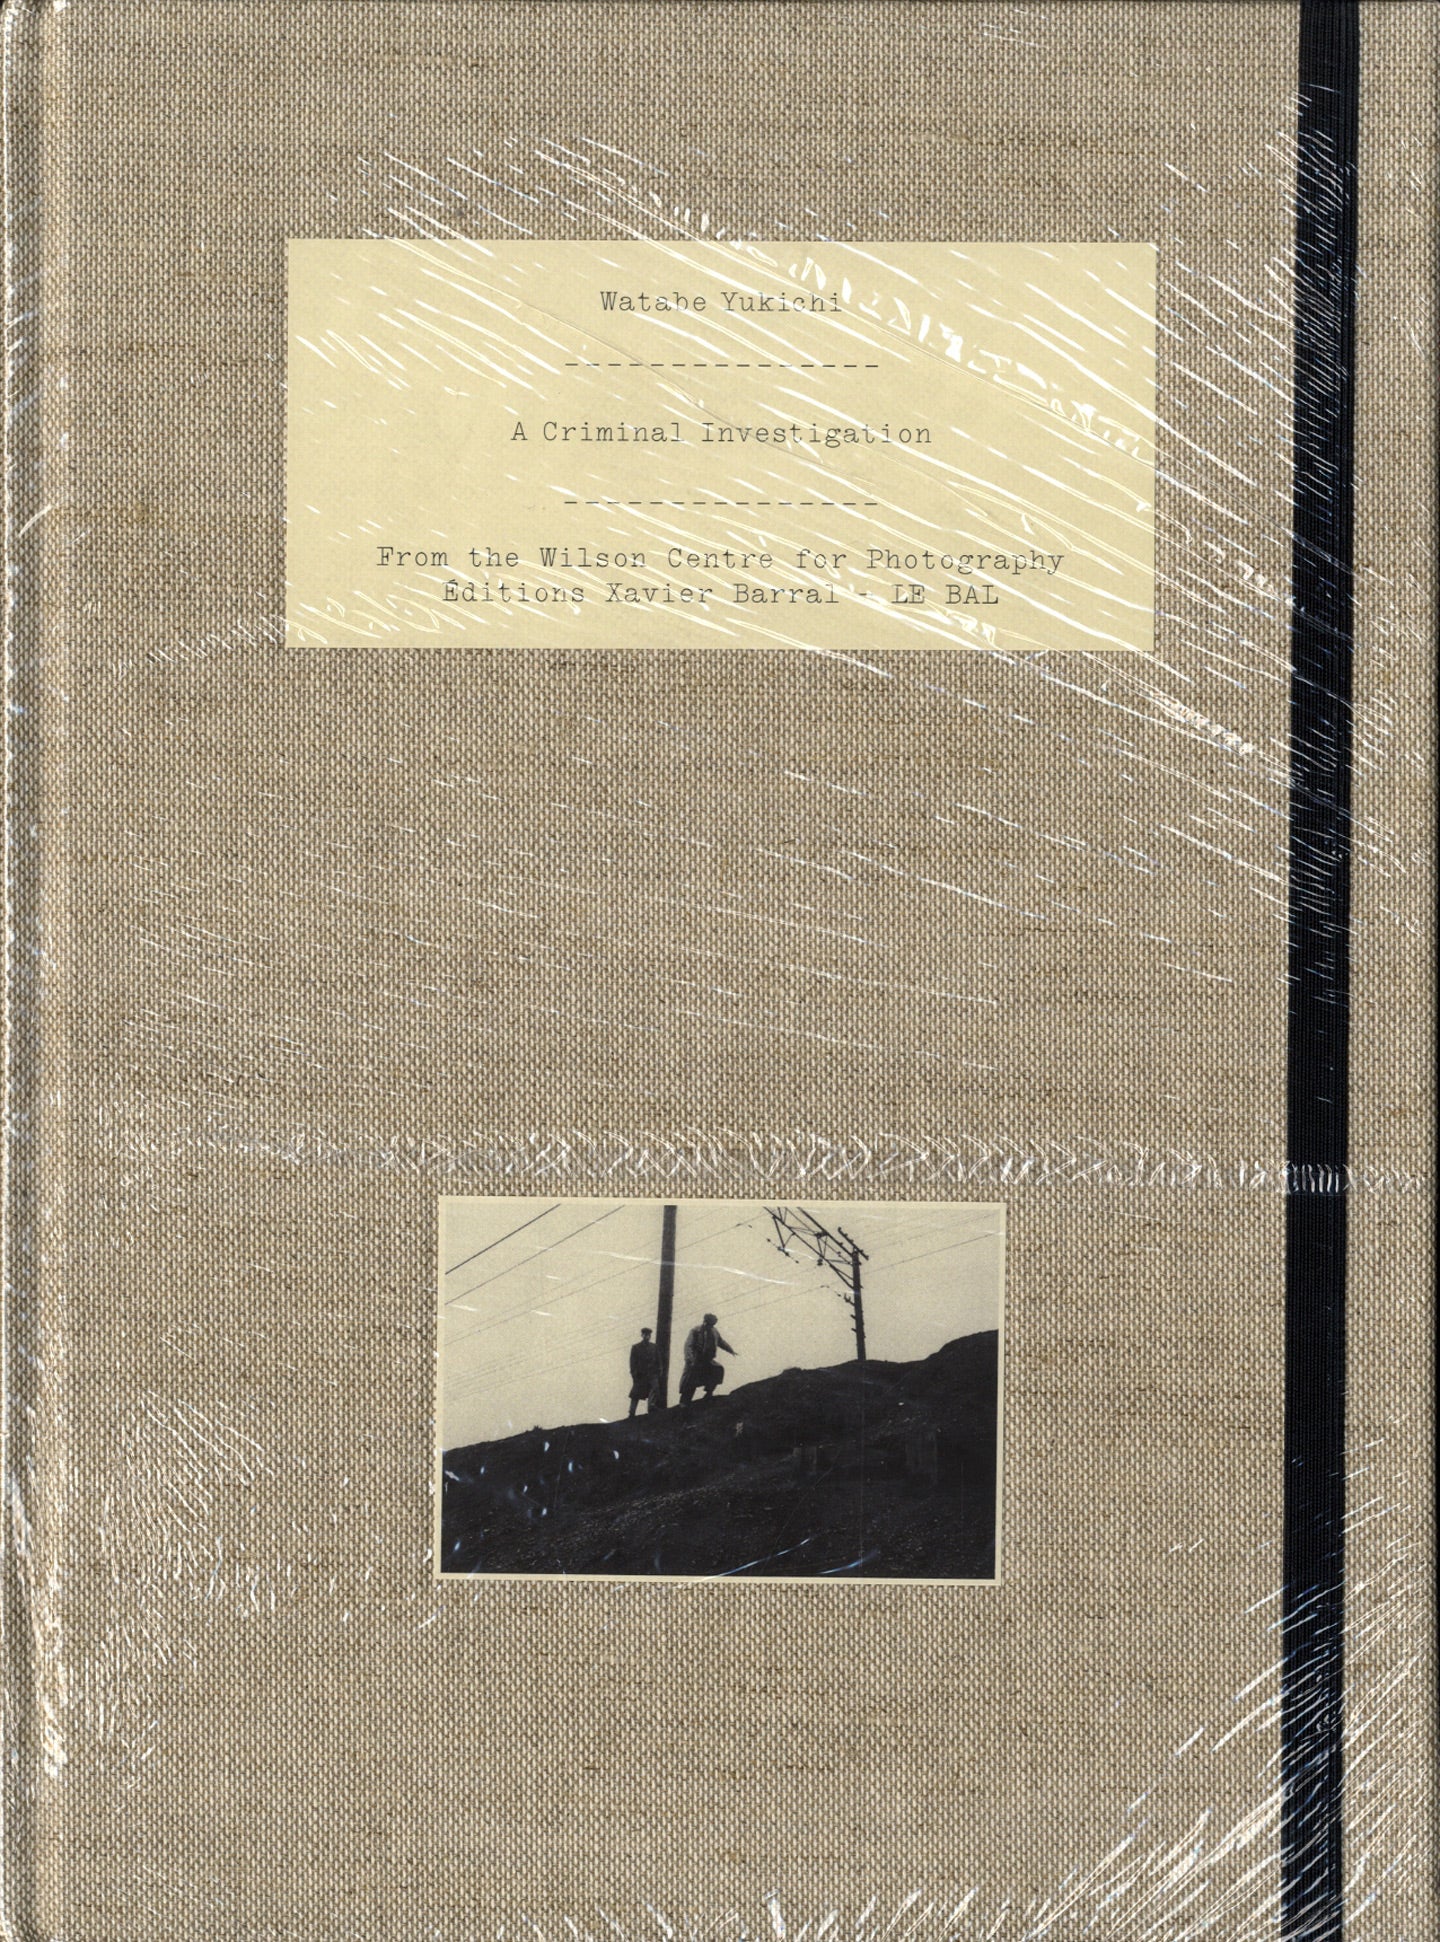 Yukichi Watabe: A Criminal Investigation First Edition by Yukichi WATABE on  Vincent Borrelli, Bookseller